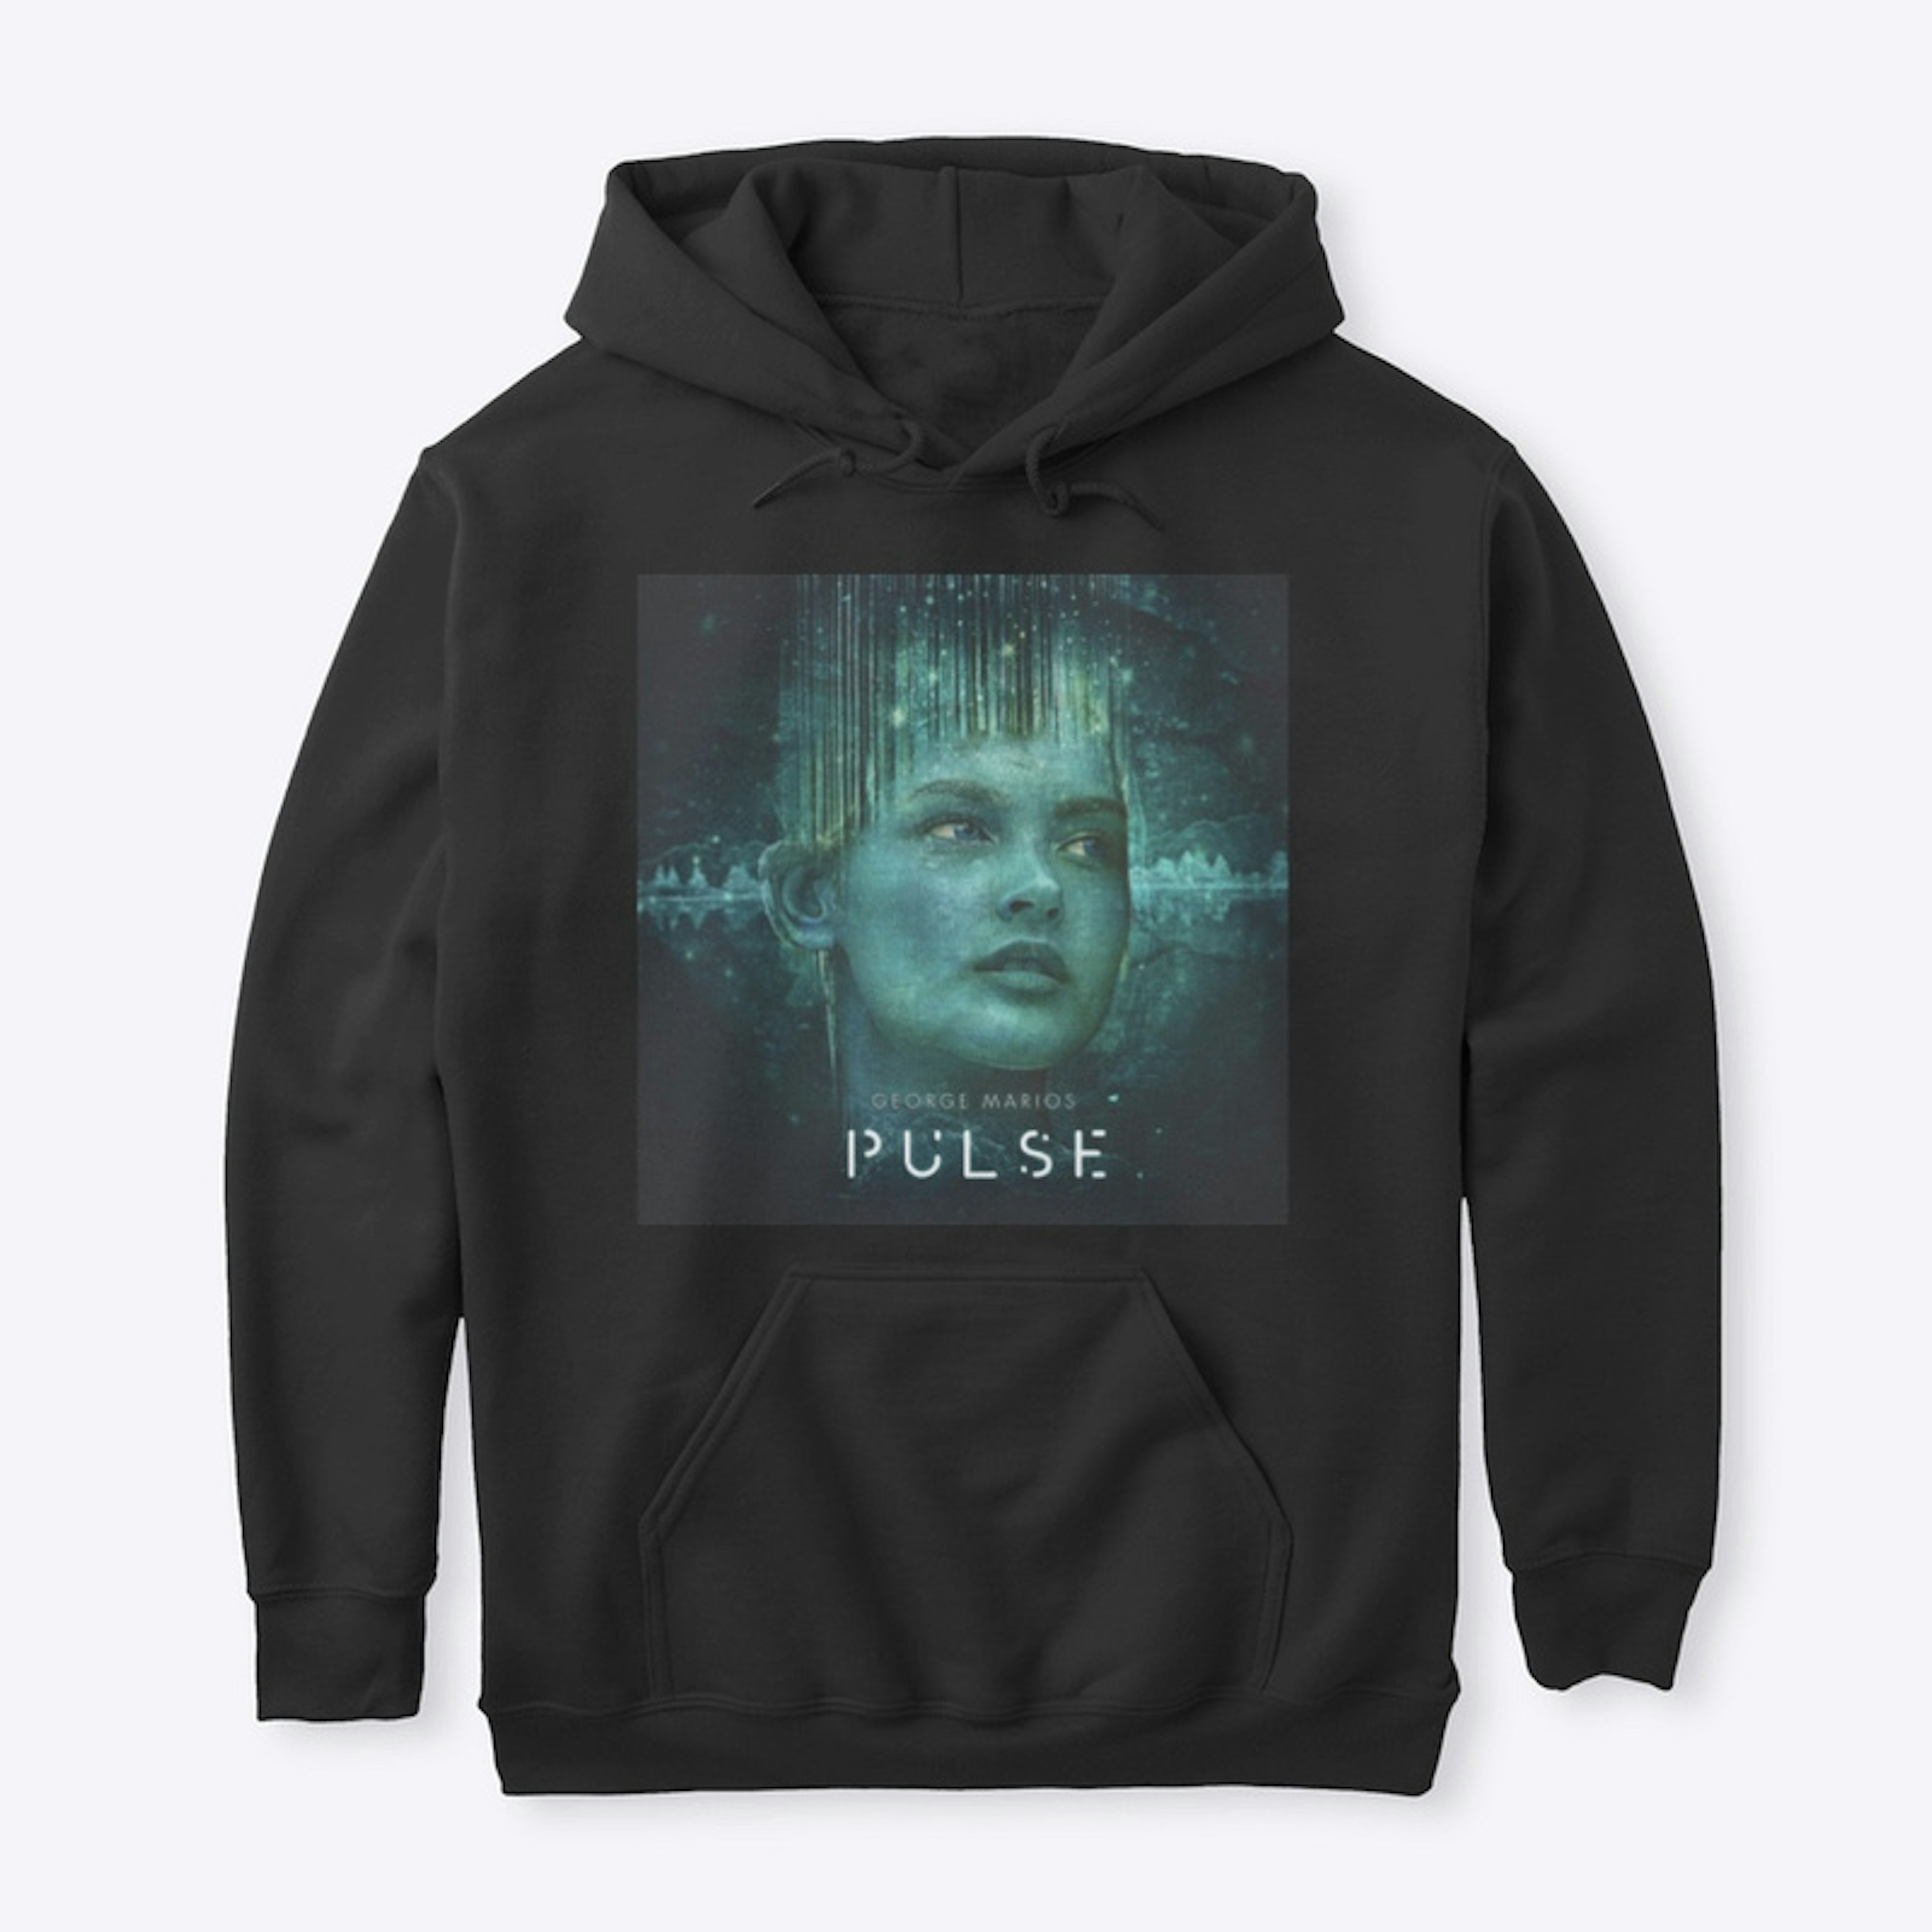 "Pulse" Pullover